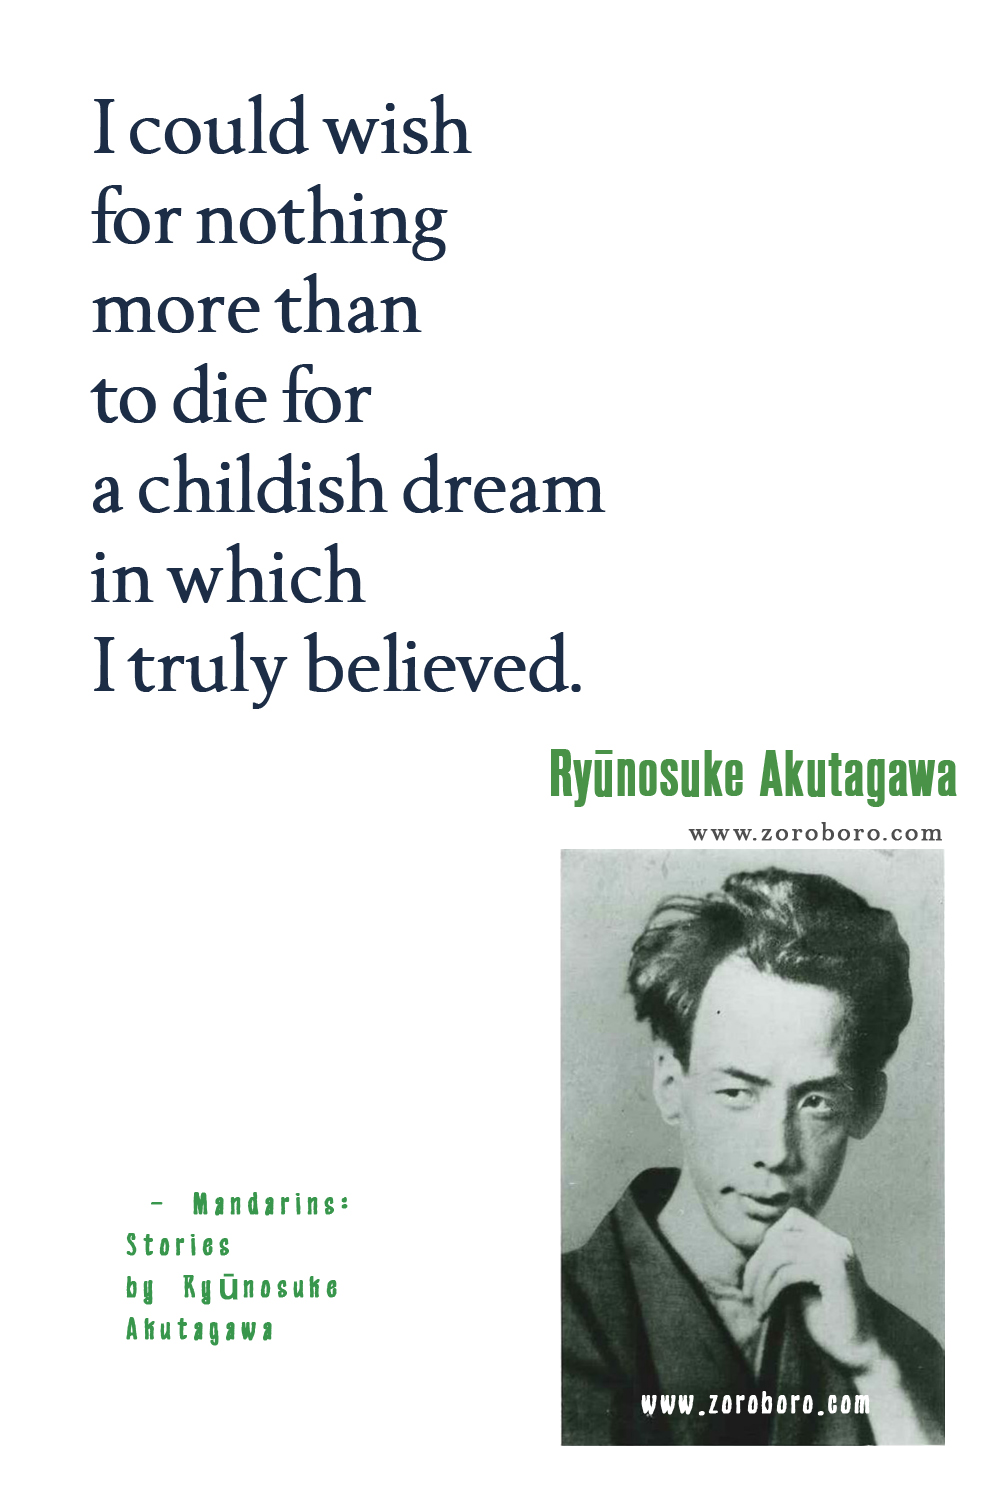 Ryūnosuke Akutagawa Quotes, Ryūnosuke Akutagawa The Life of a Stupid Man Quotes & Rashomon and Seventeen Other Stories, Ryūnosuke Akutagawa Books Quotes, Ryūnosuke Akutagawa Japanese Writer